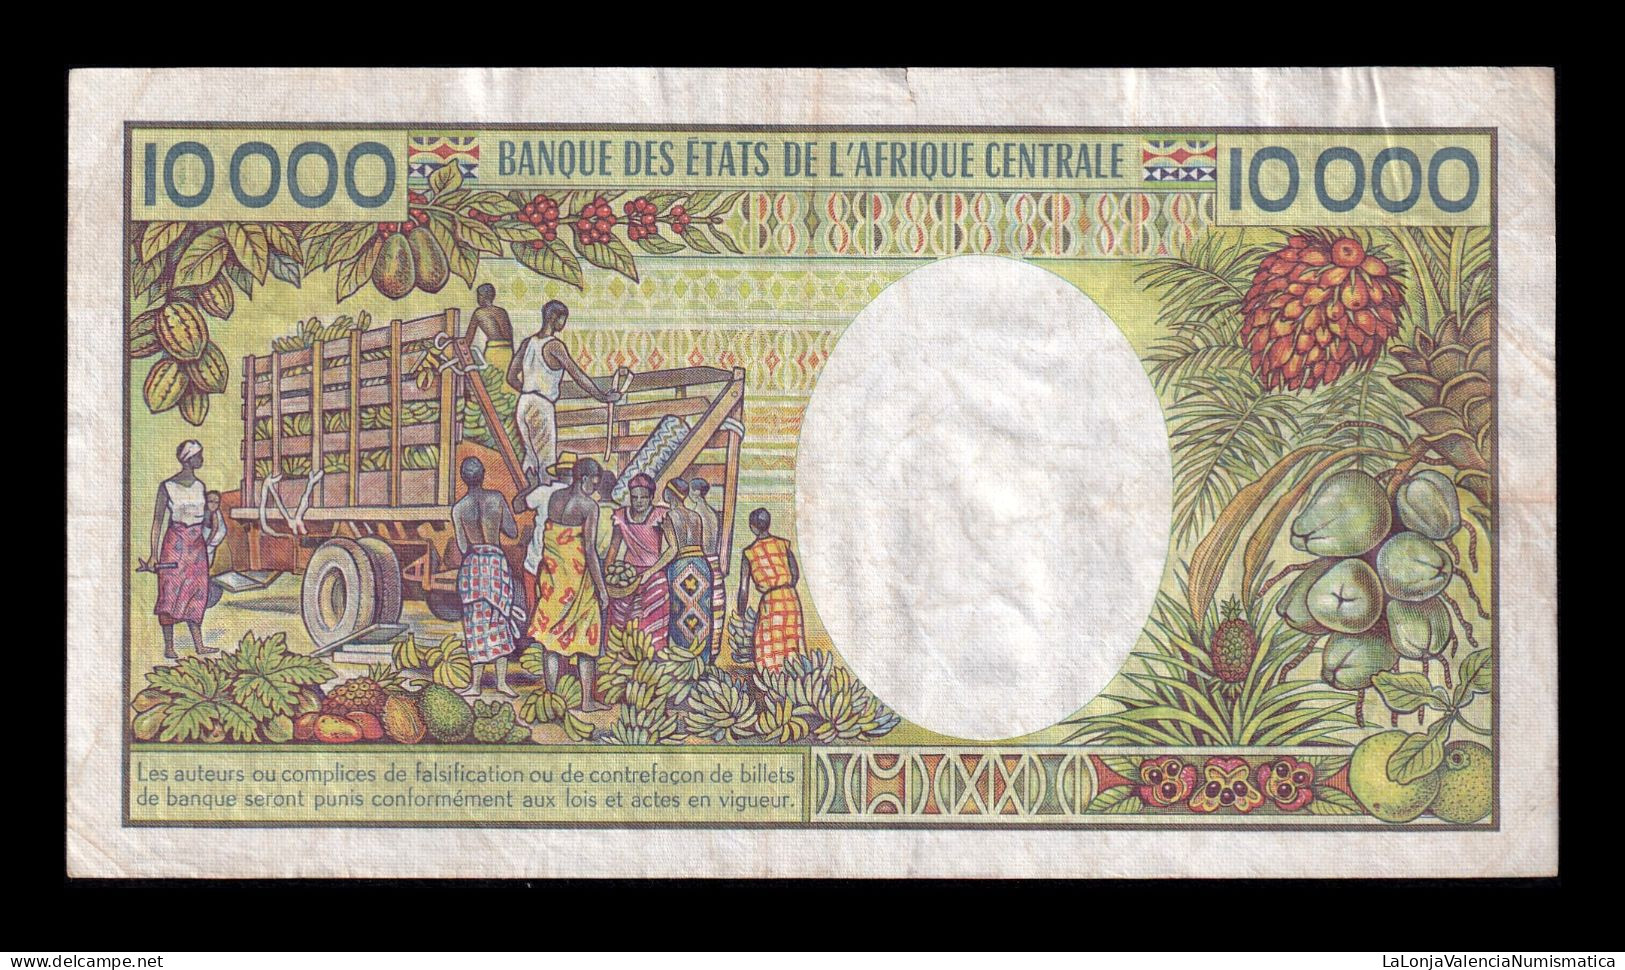 Camerún Cameroon 10000 Francs ND (1981) Pick 20 Bc/Mbc F/Vf - Cameroon